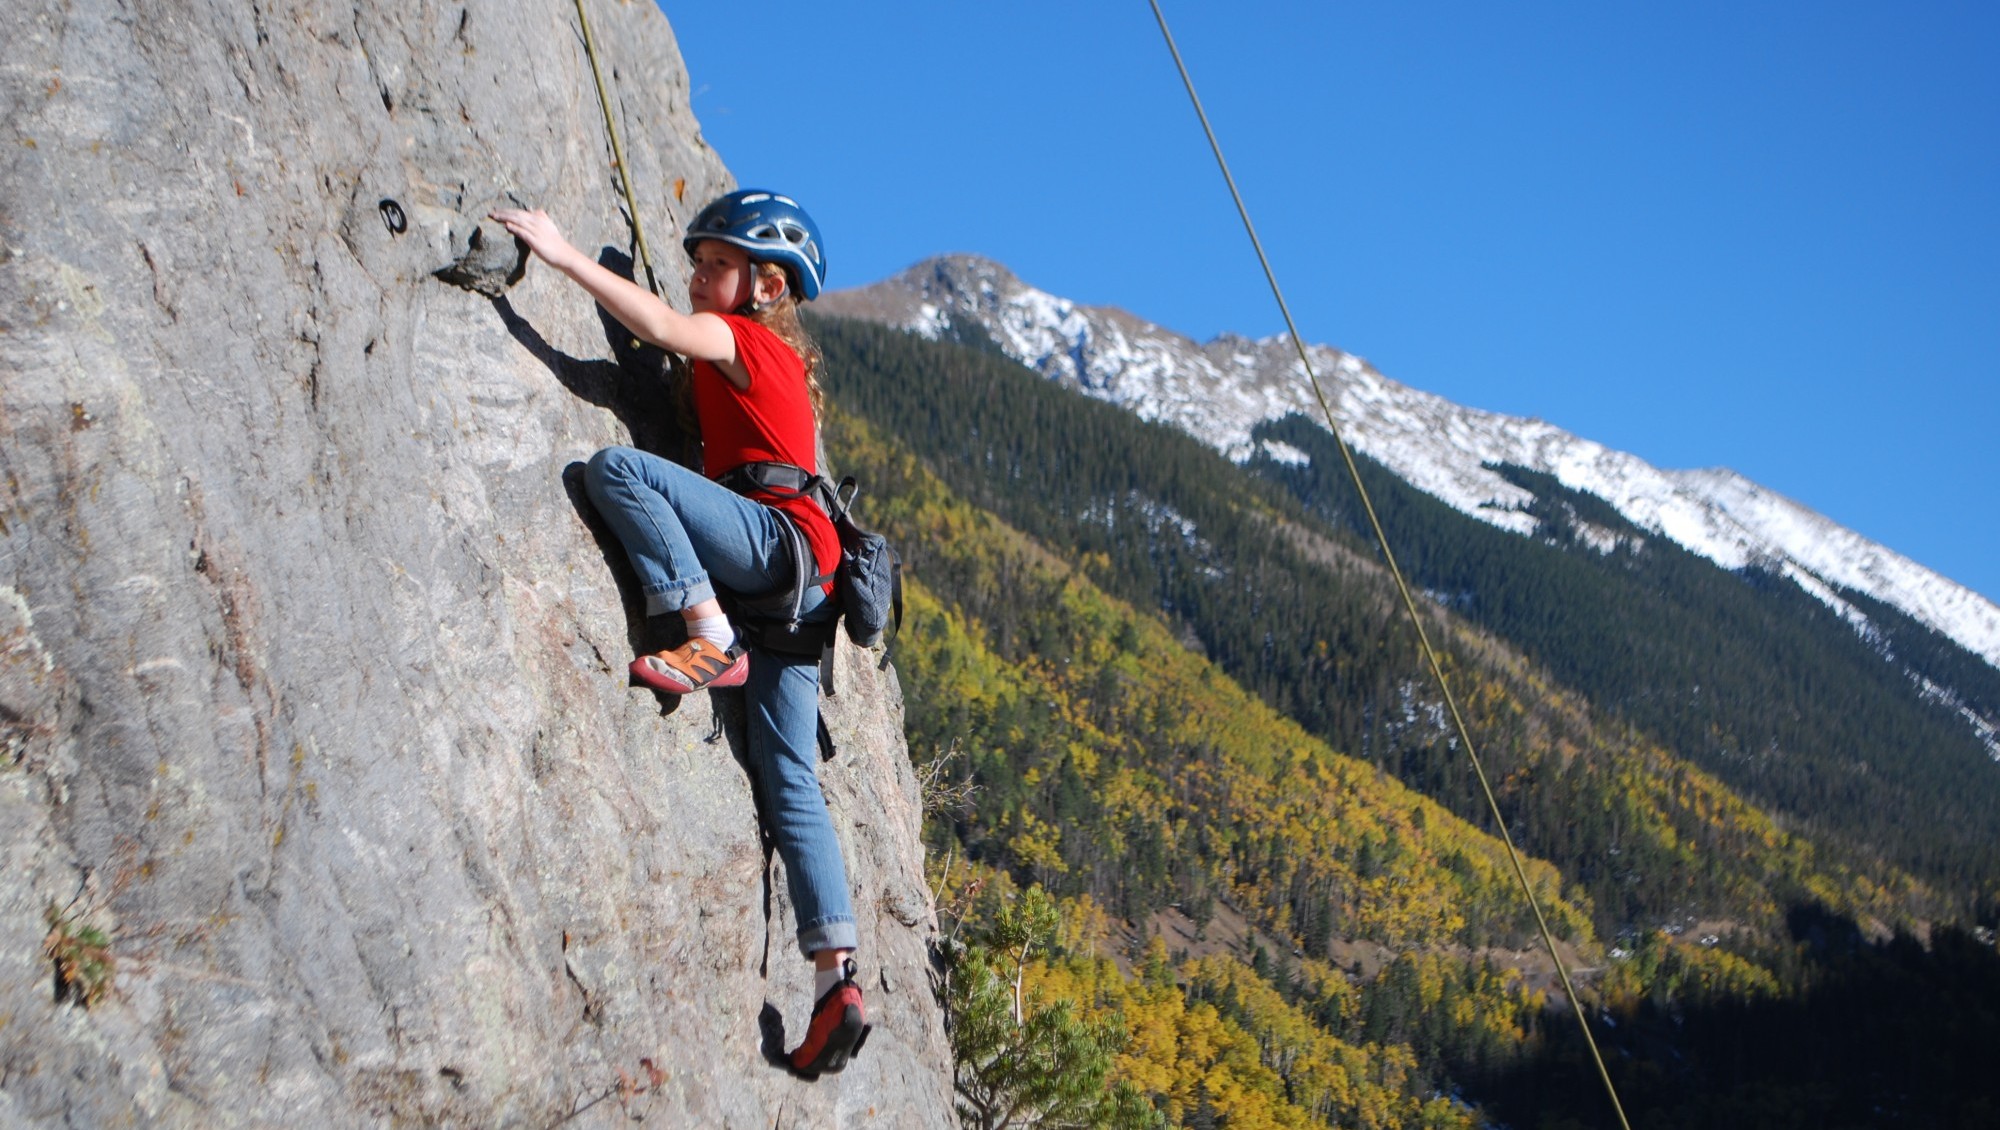 About - Mountain Skills Rock Climbing Adventures